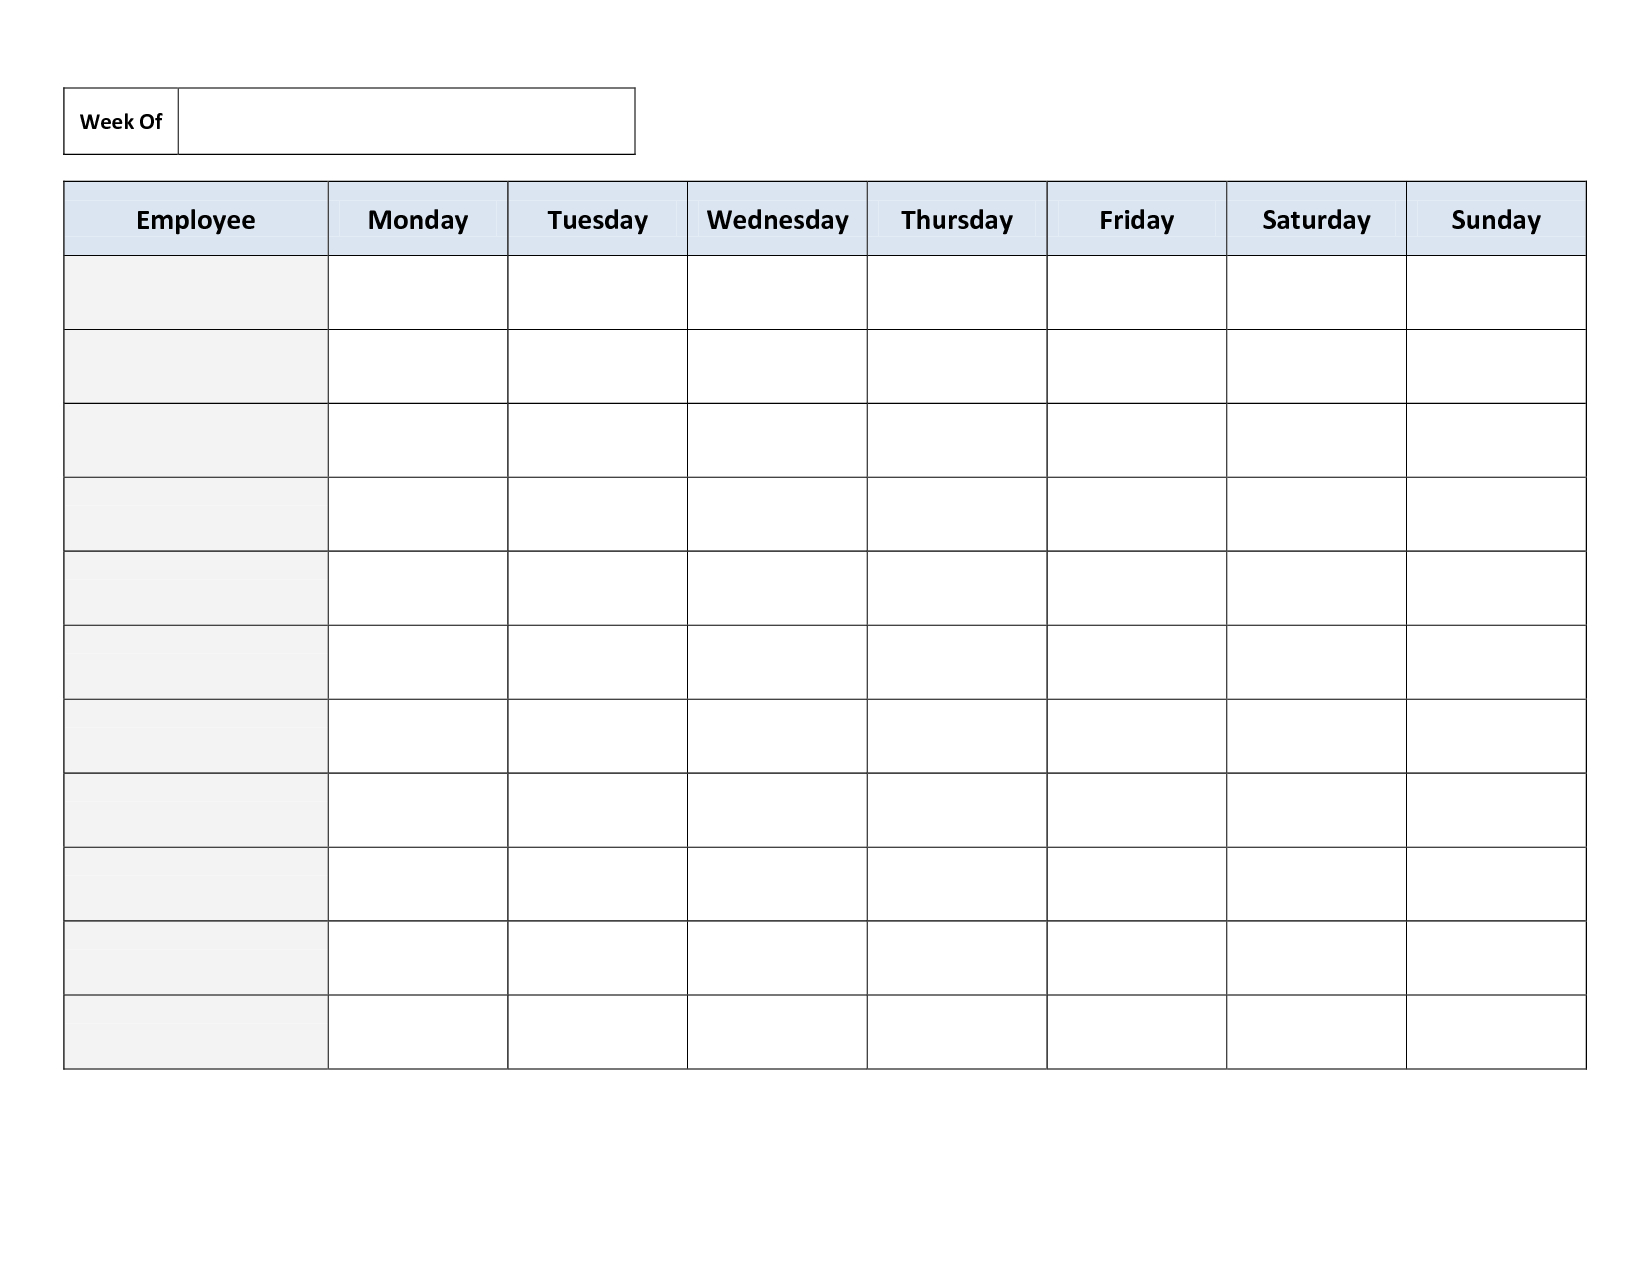 Weekly Employee Work Schedule Template. Free Blank Schedule.pdf - Free Printable Schedule